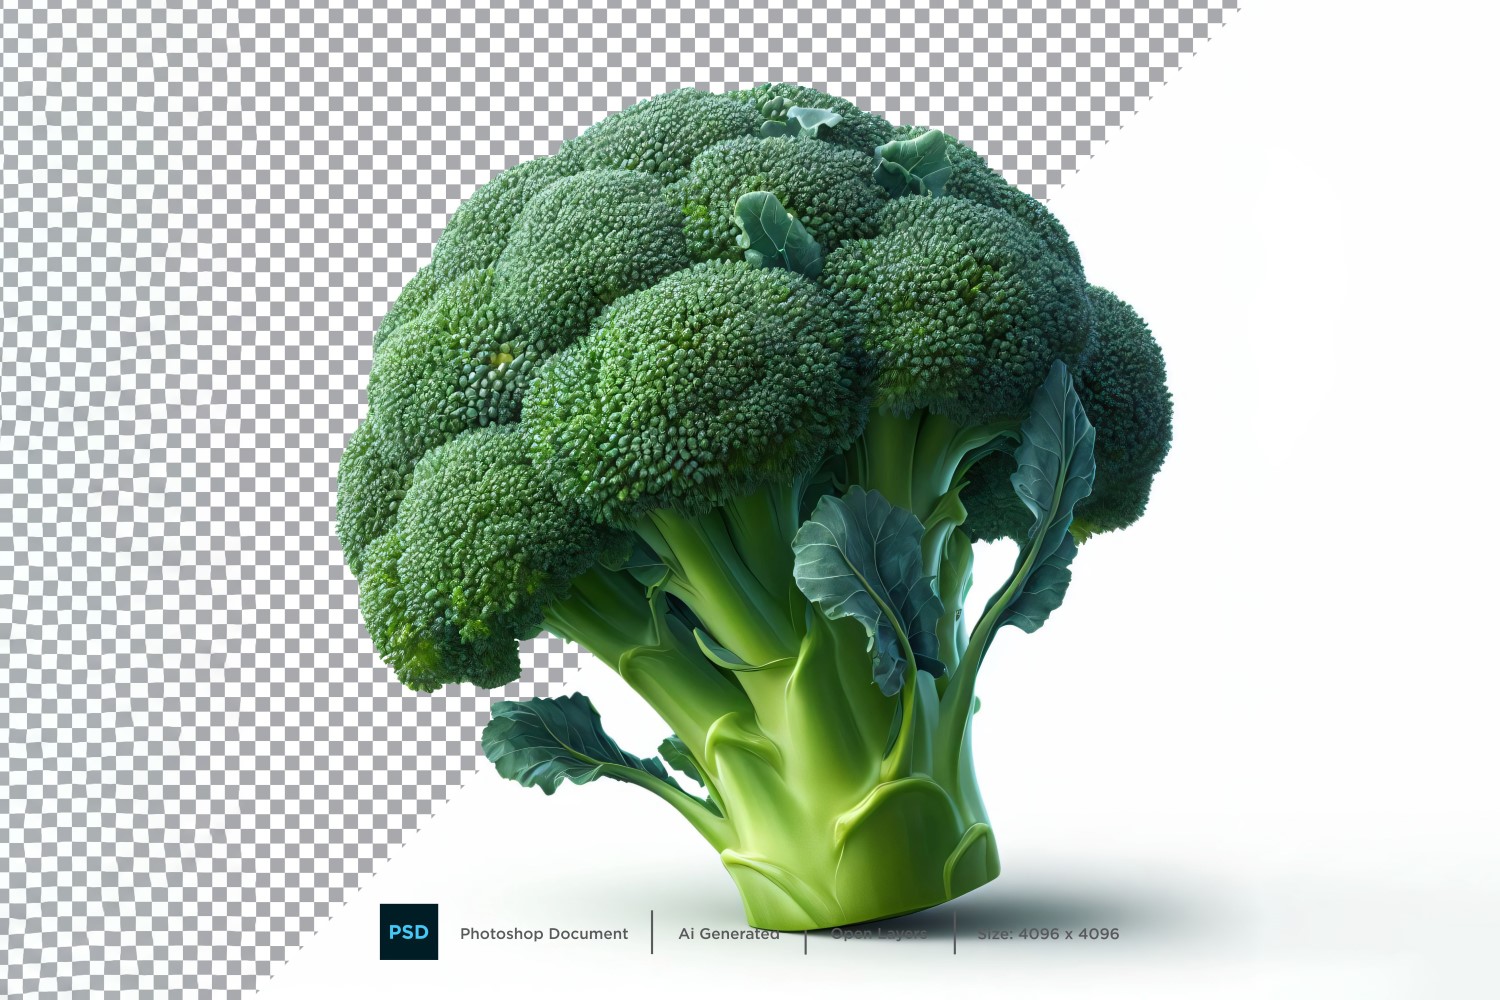 Broccoli Fresh Vegetable Transparent background 07